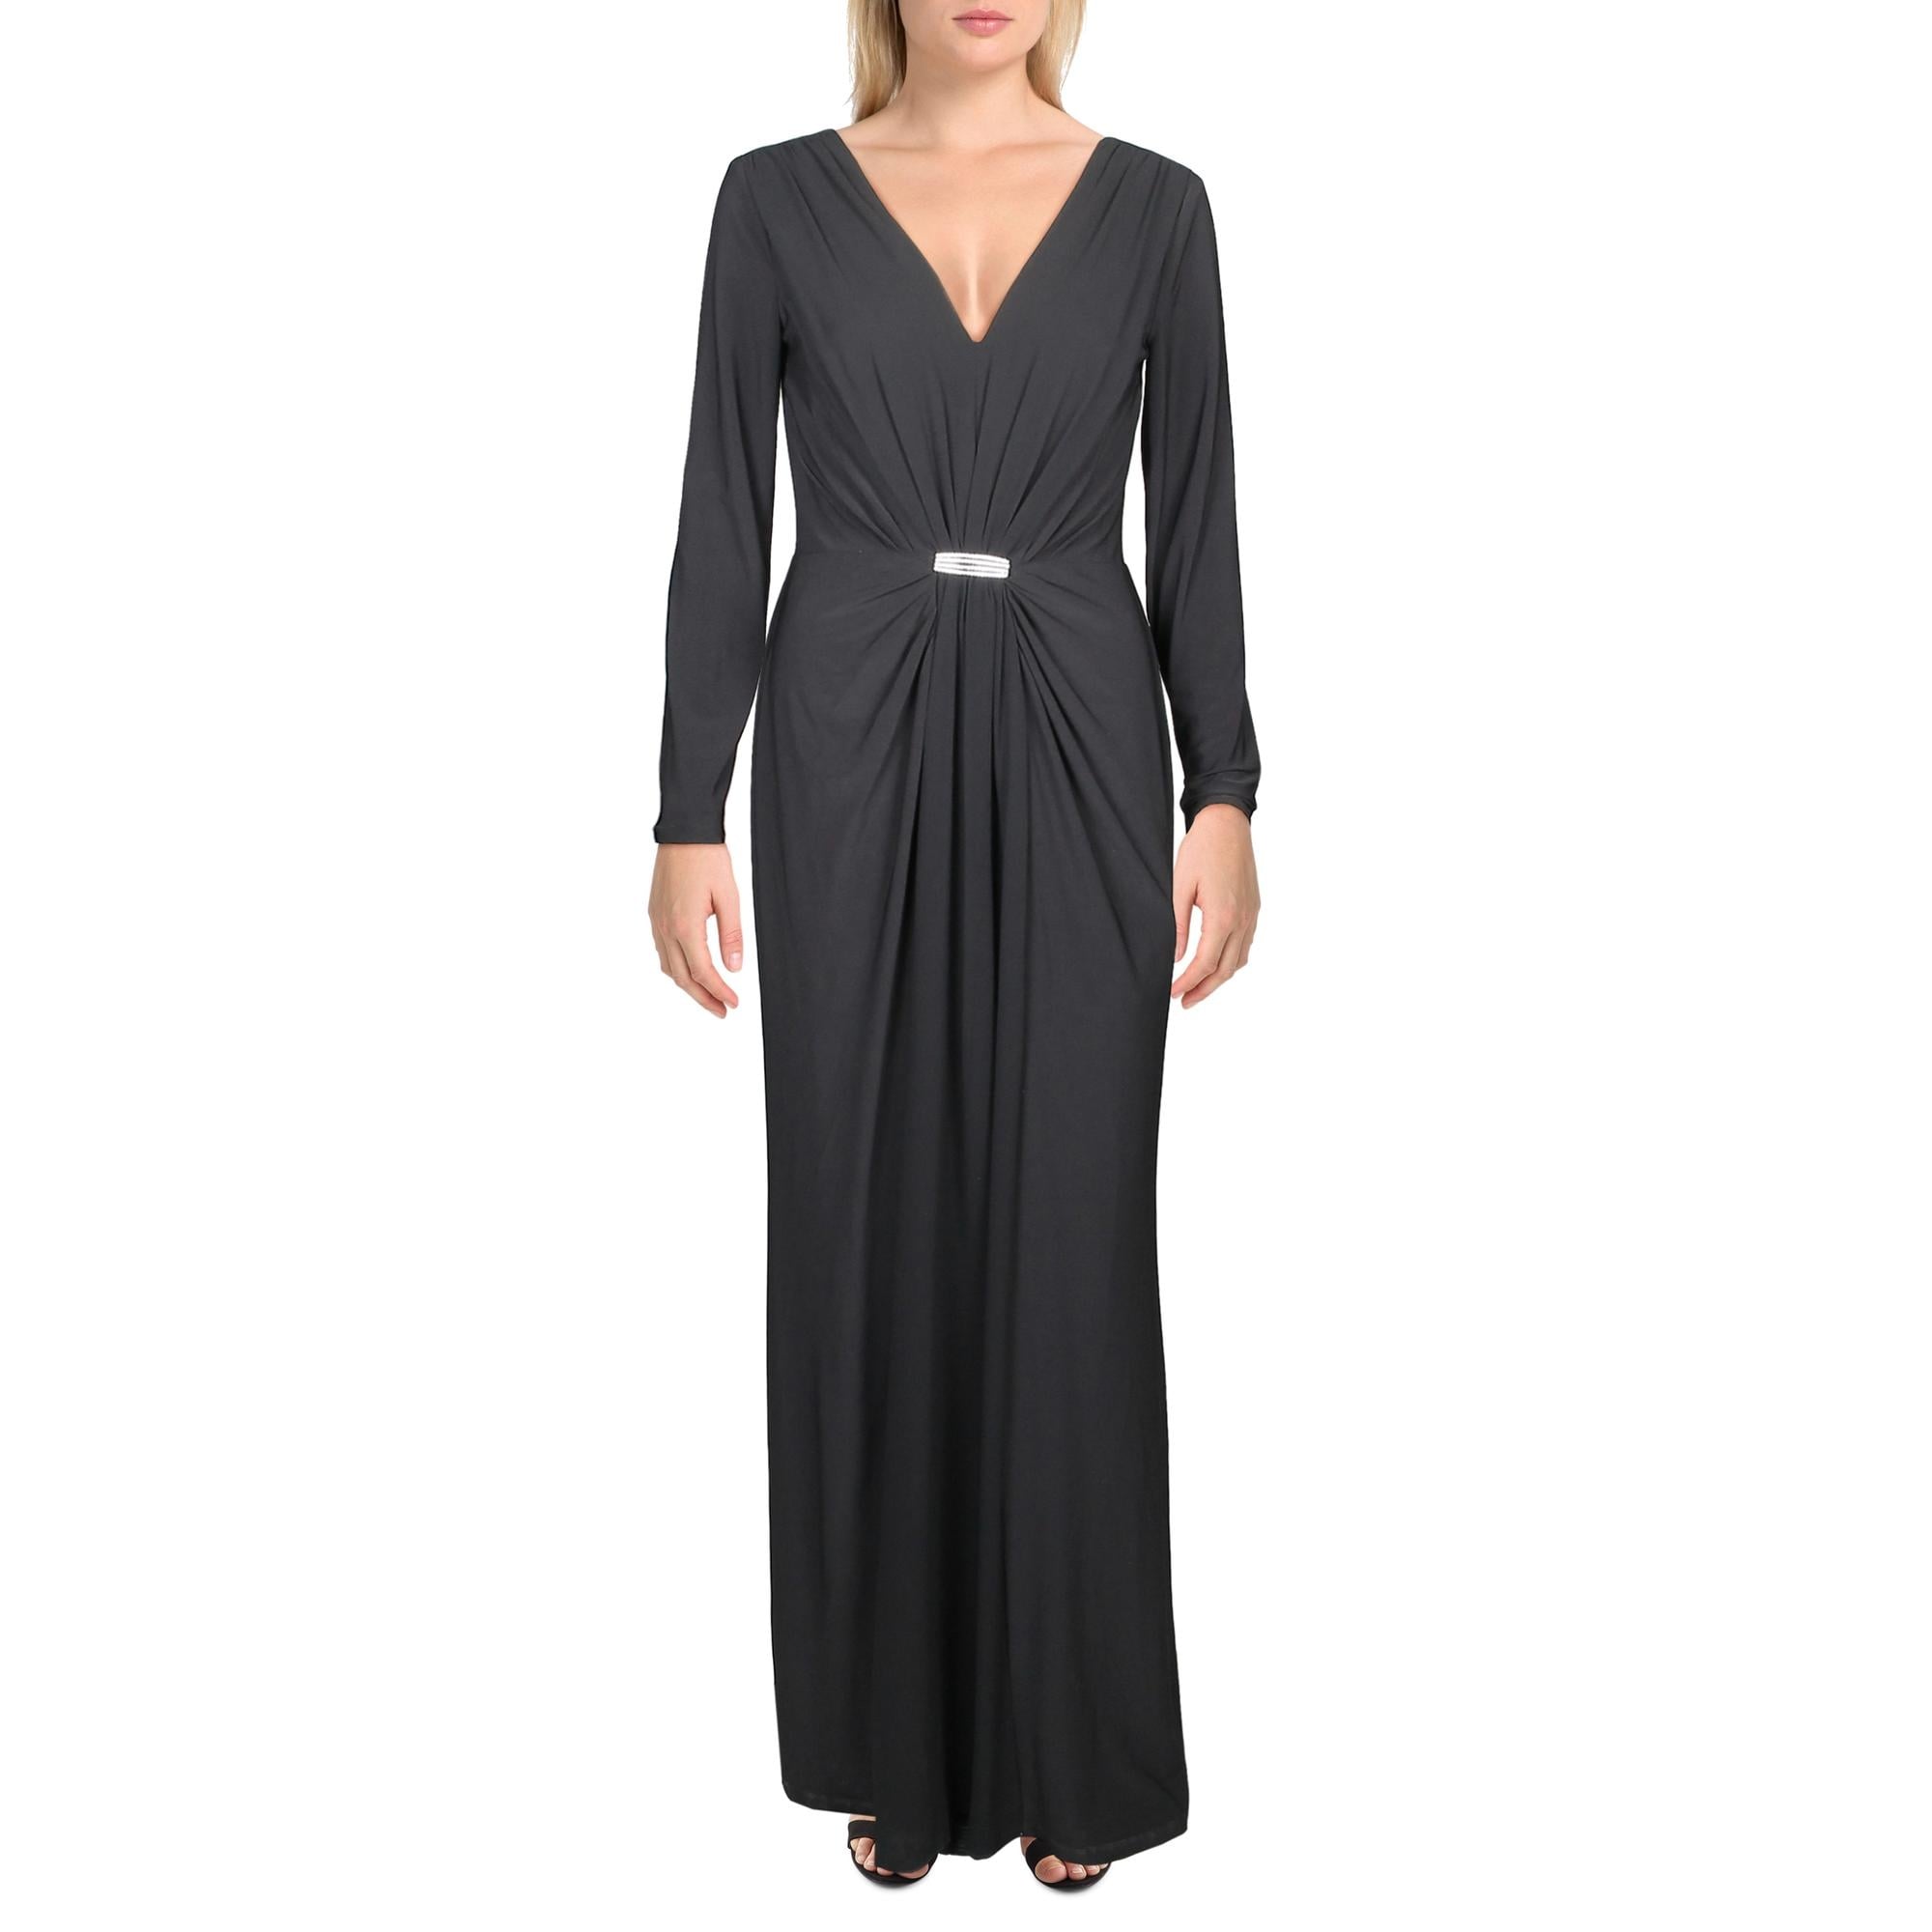 black wrap evening dress Big sale - OFF 68%